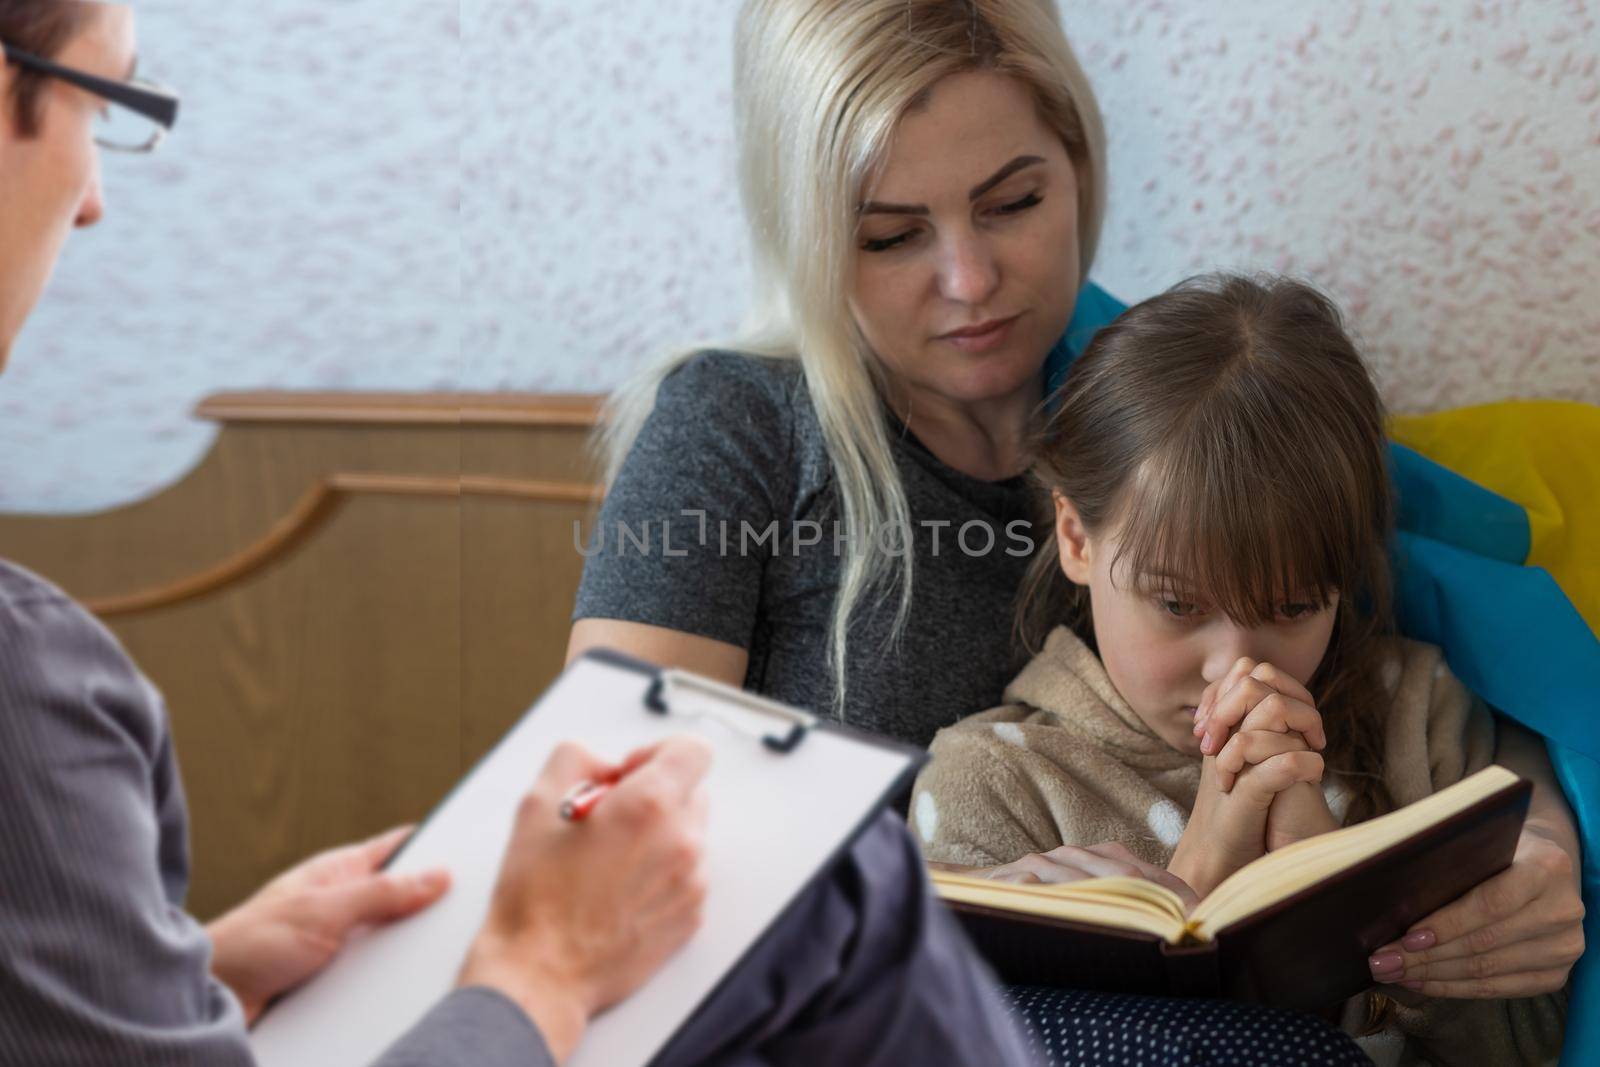 psychologist for children from Ukraine by Andelov13